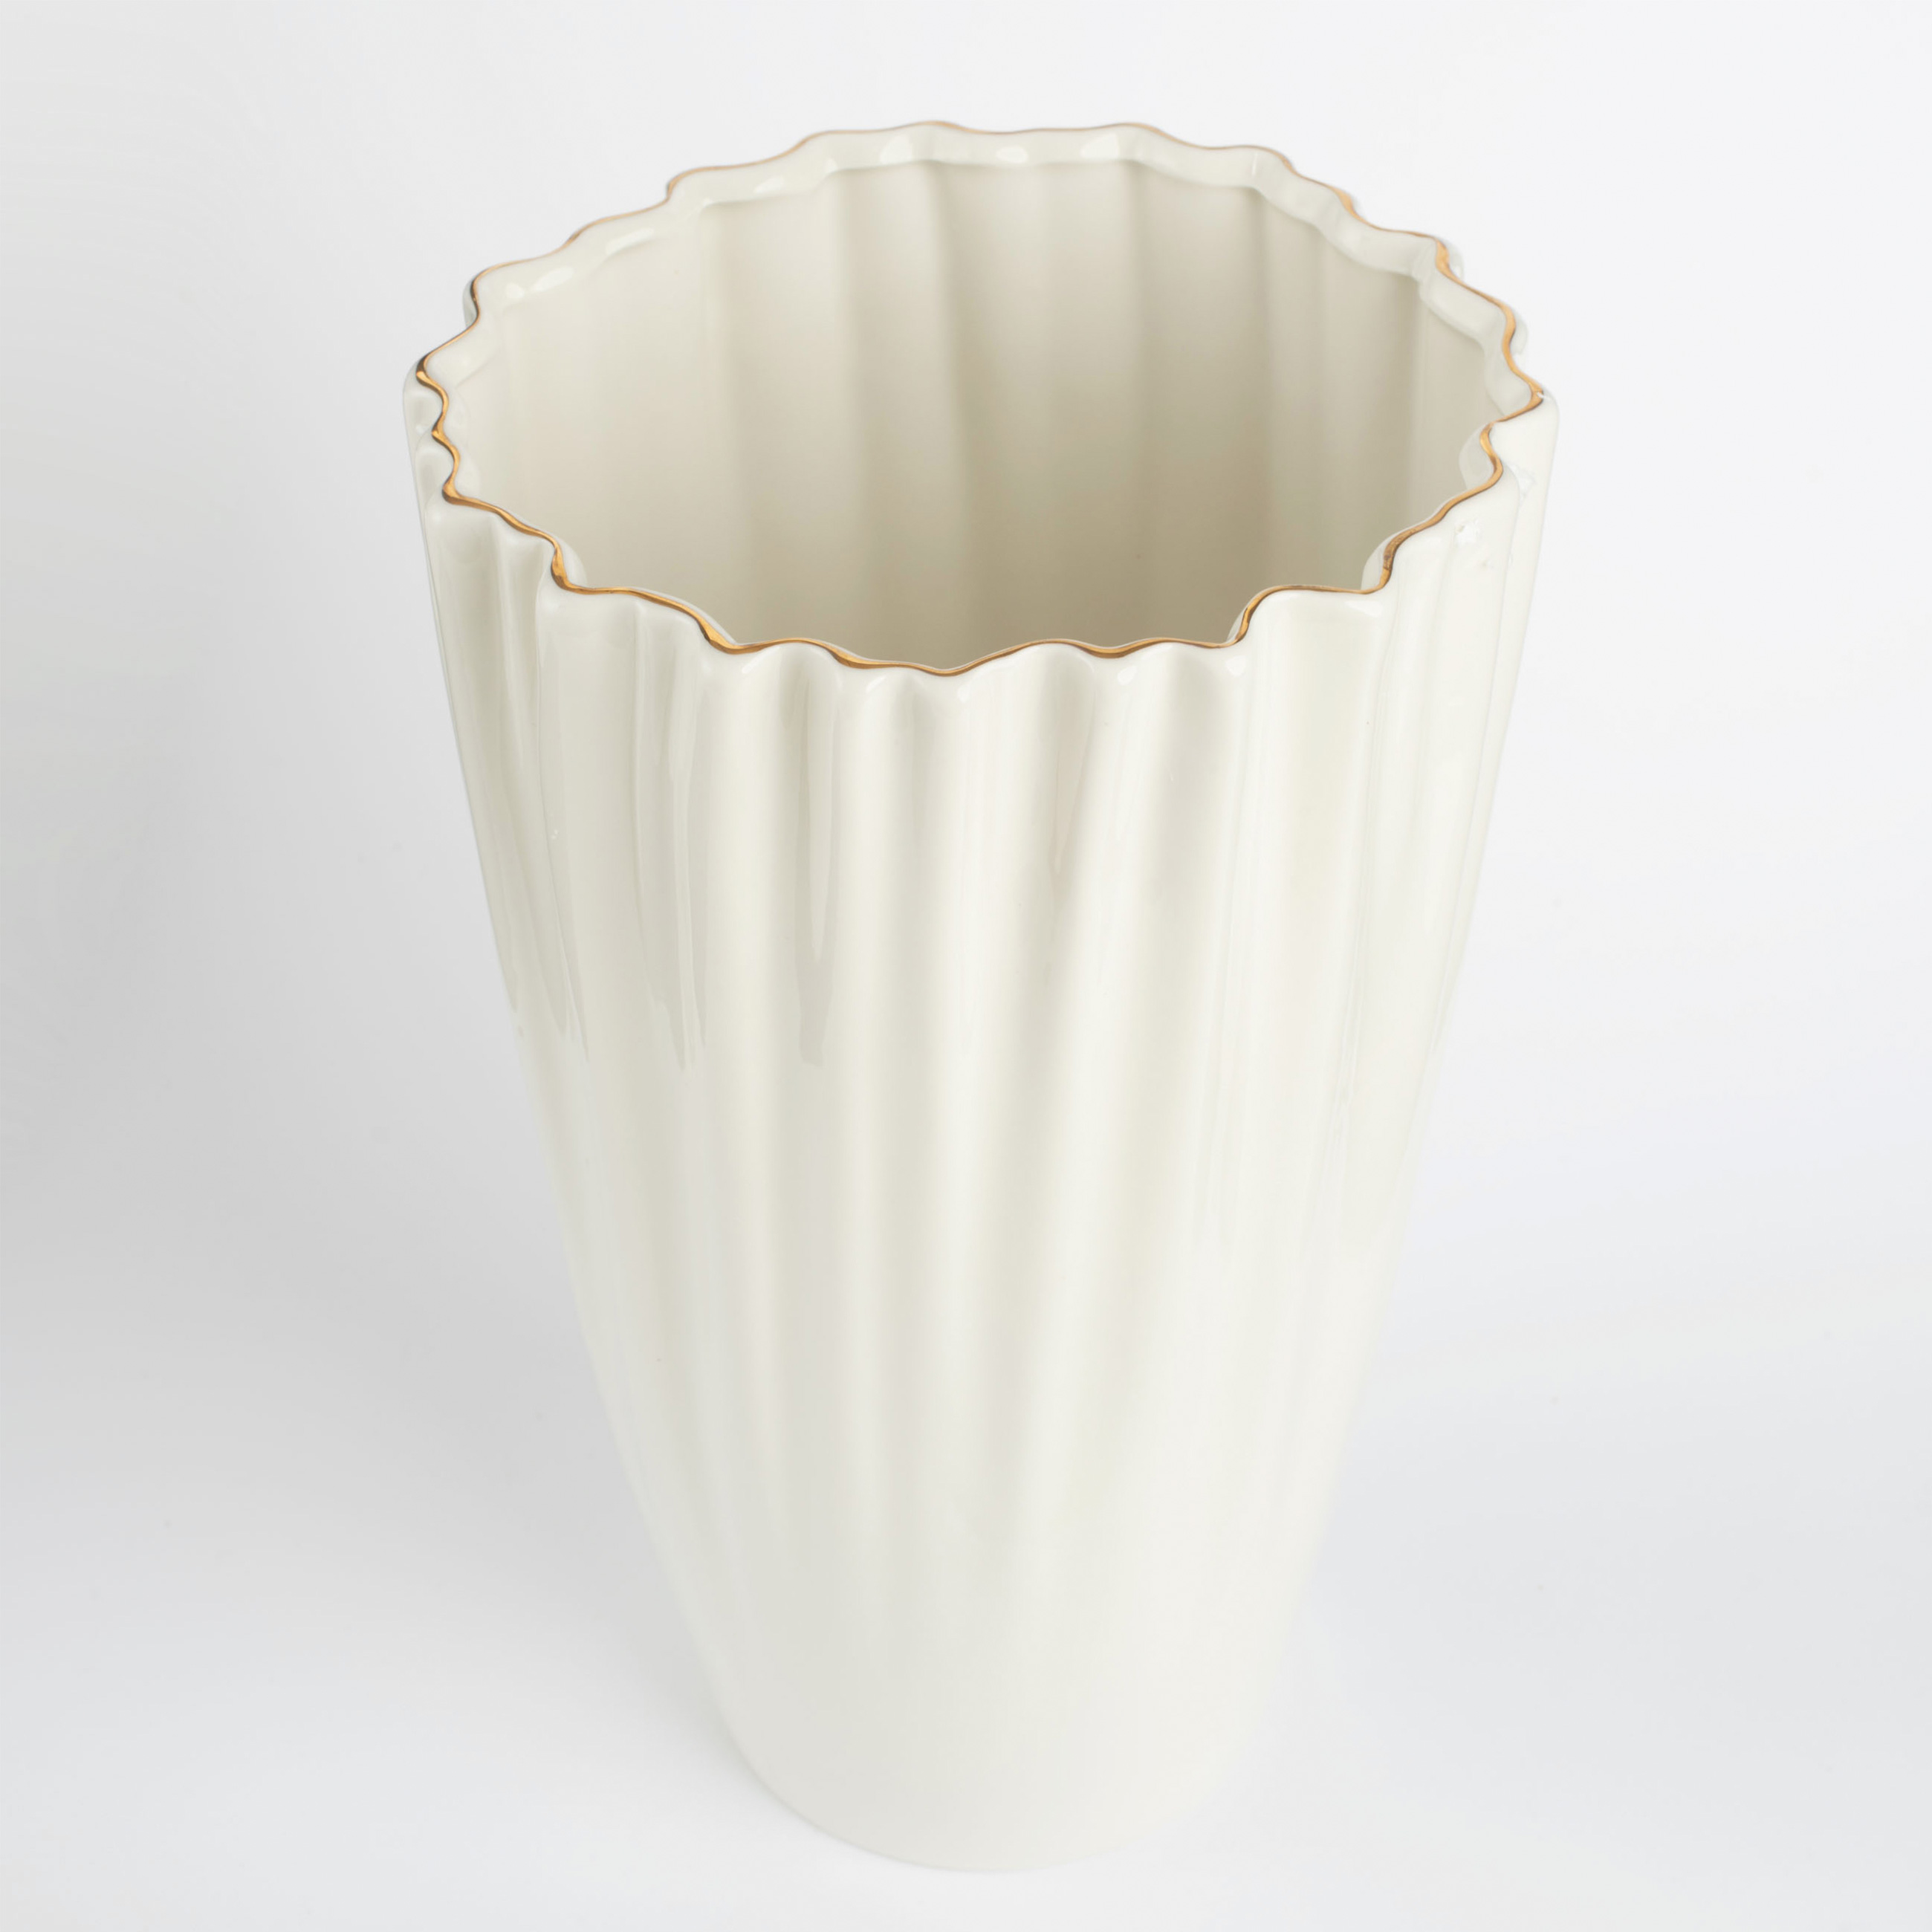 Flower vase, 27 cm, porcelain R, with golden edging, Crumpled effect, Crumple gold изображение № 2